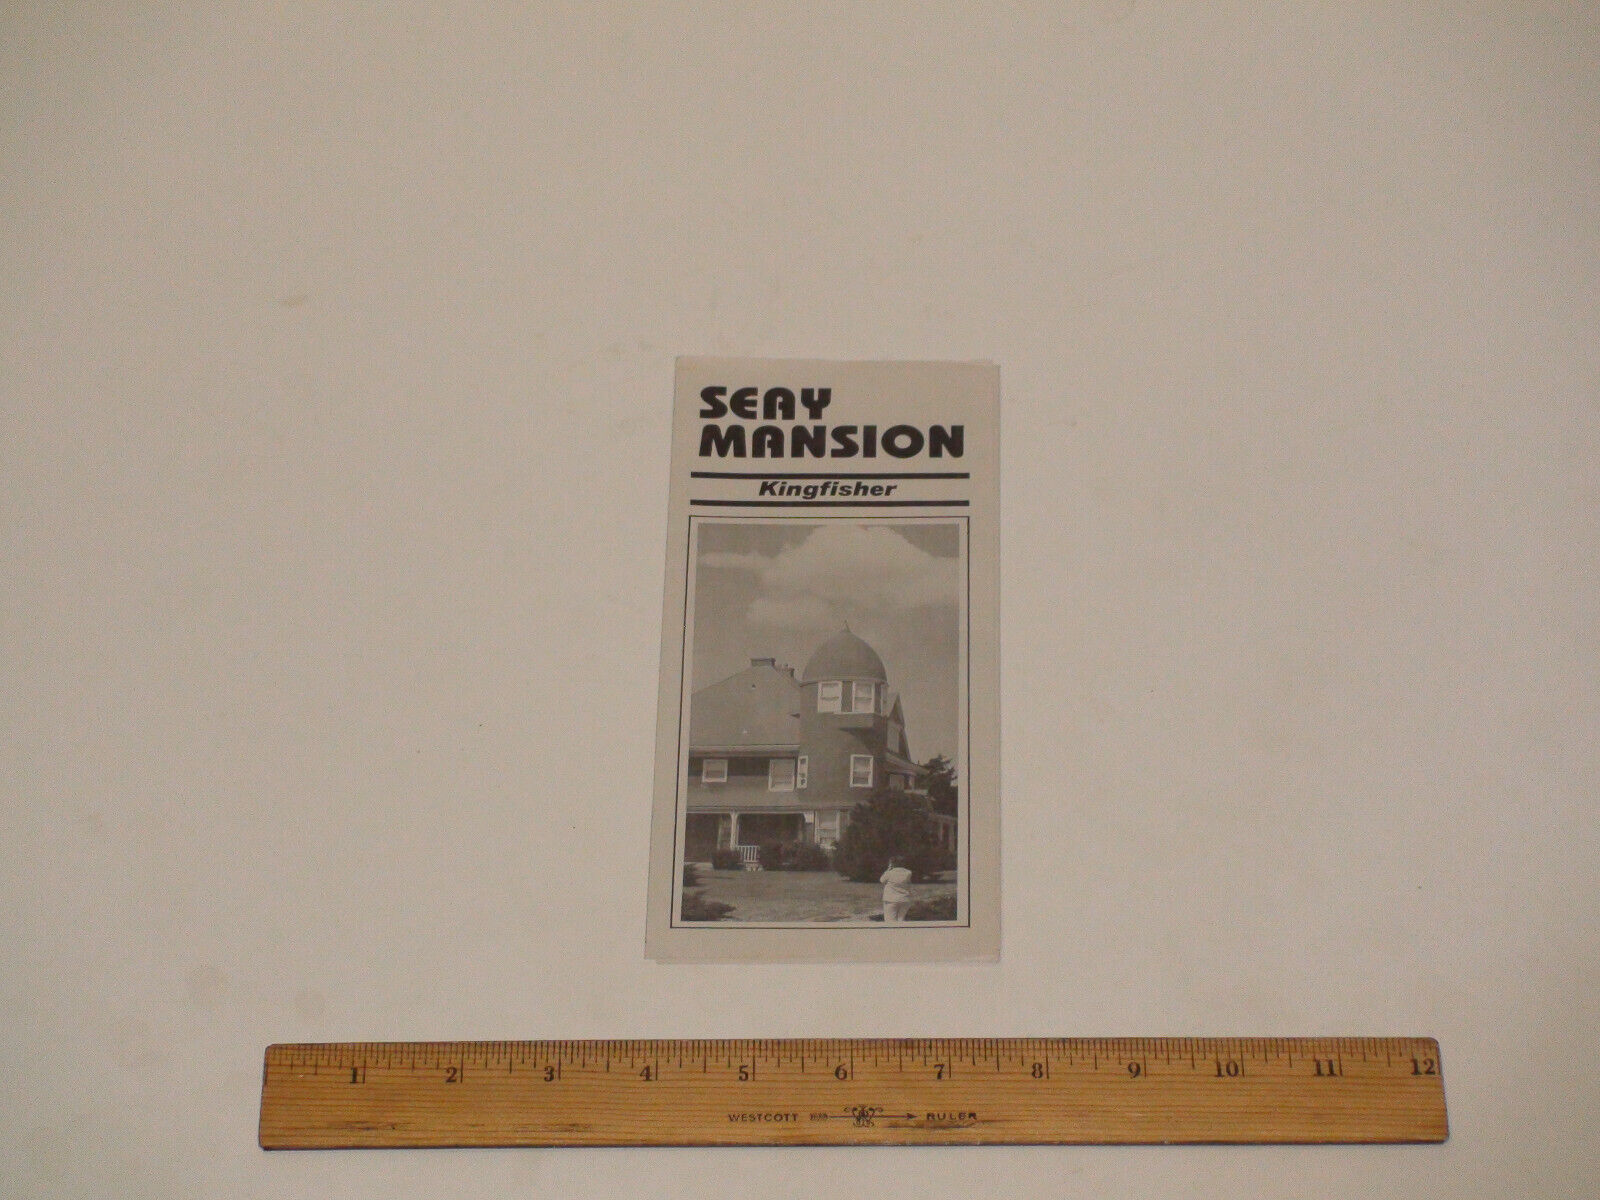 Seay Mansion - Kingfisher, OK Oklahoma Brochure / Pamphlet 1980s / 1990s